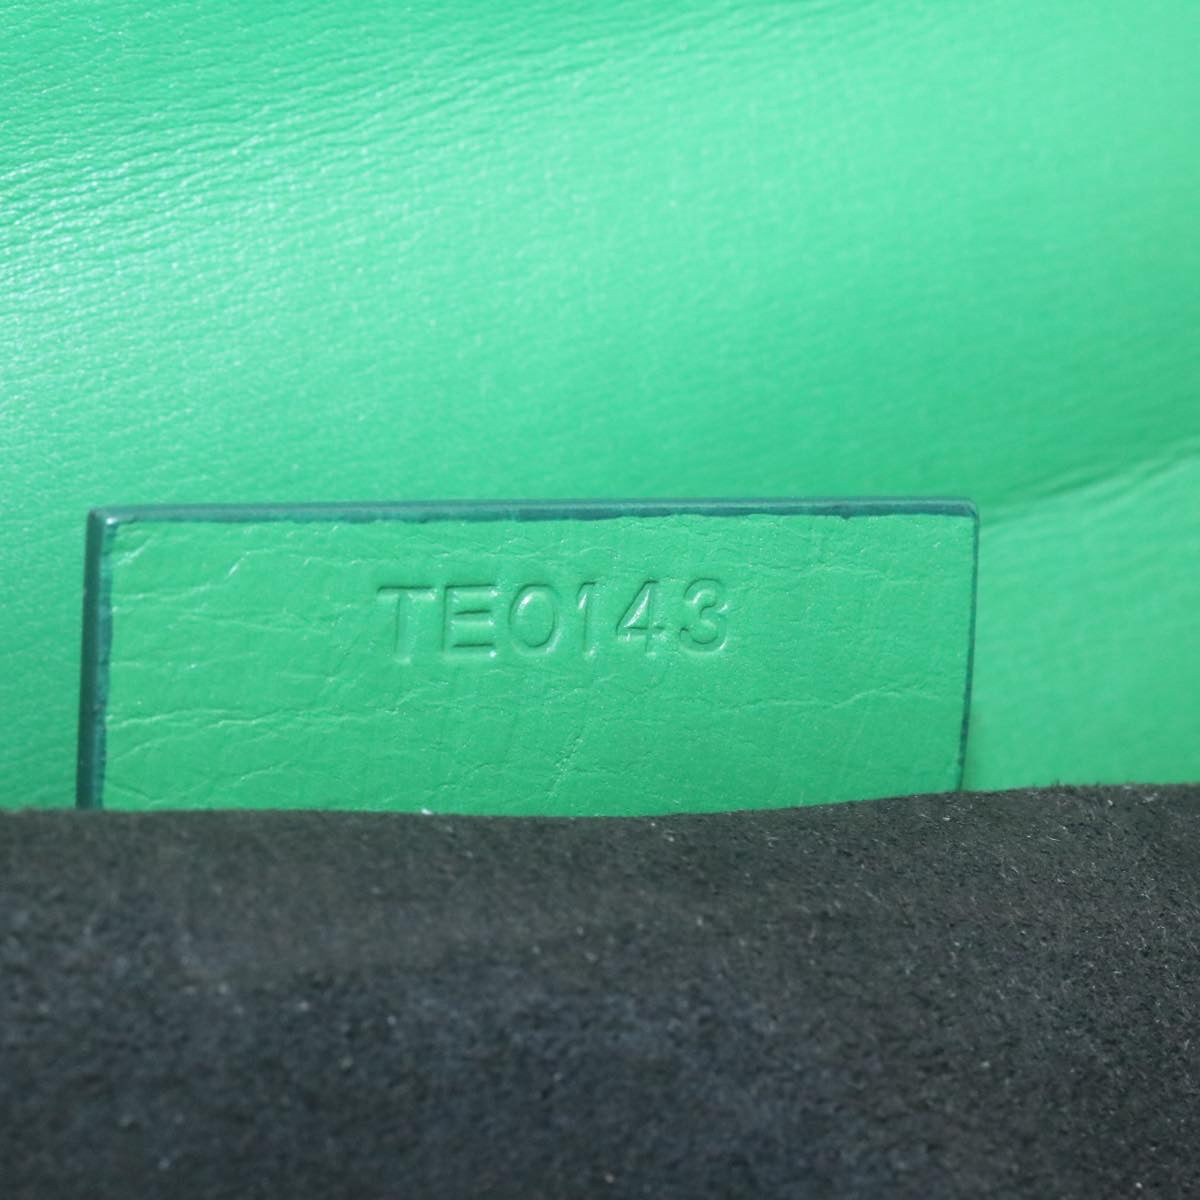 GIVENCHY Pandora box Shoulder Bag Leather Green Auth am359b